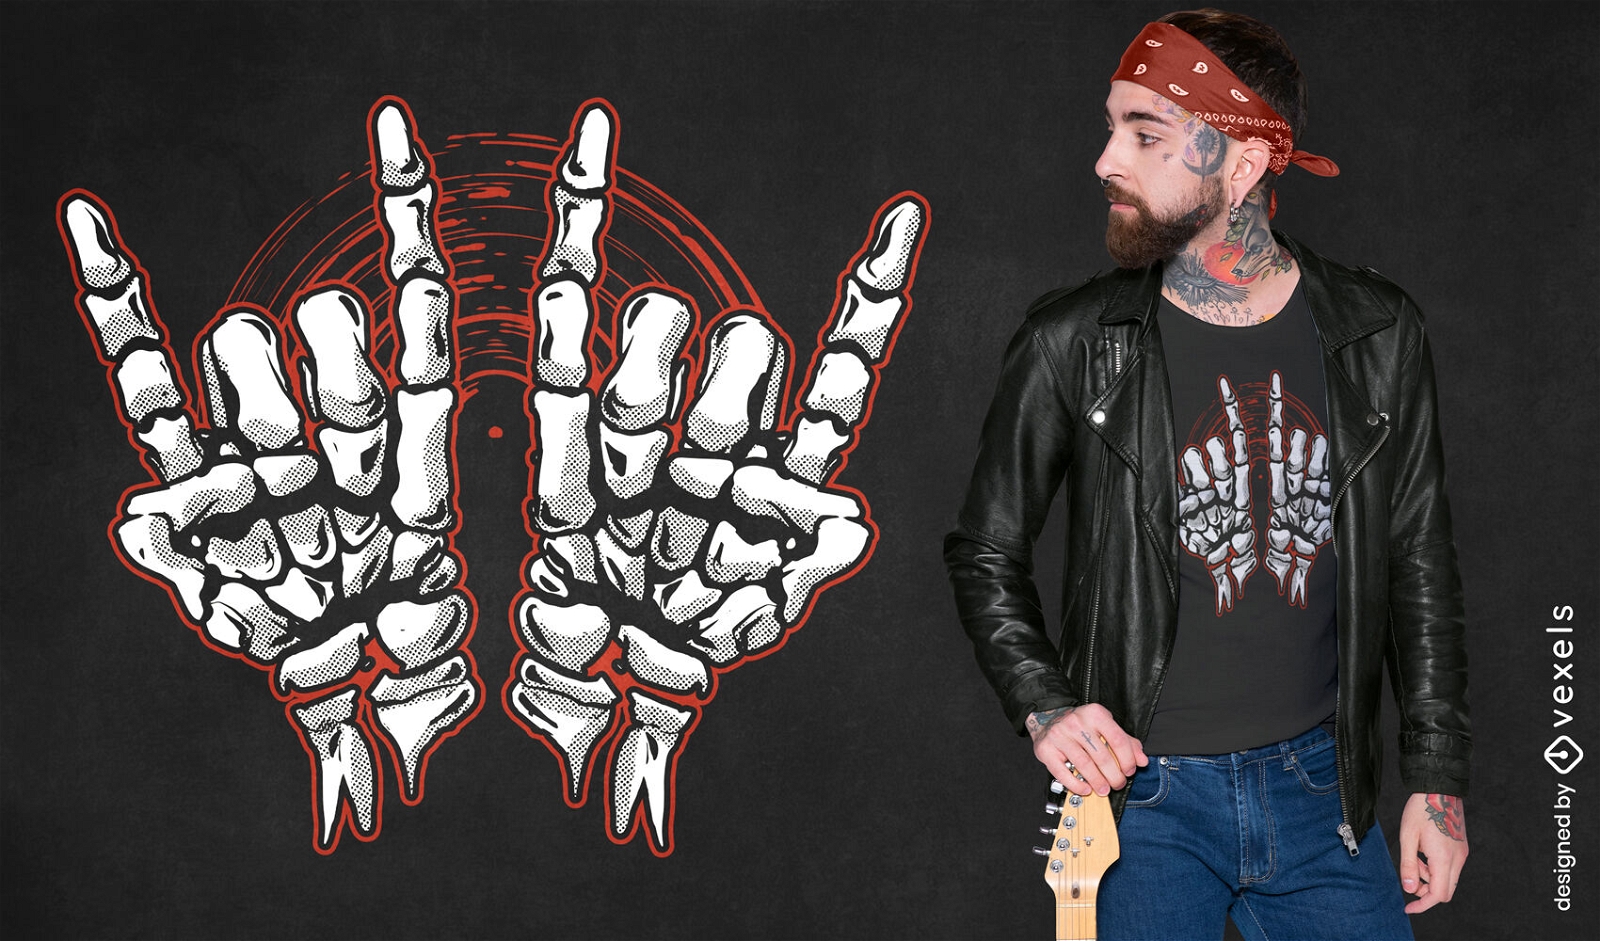 Skeleton hands rock and roll t-shirt design